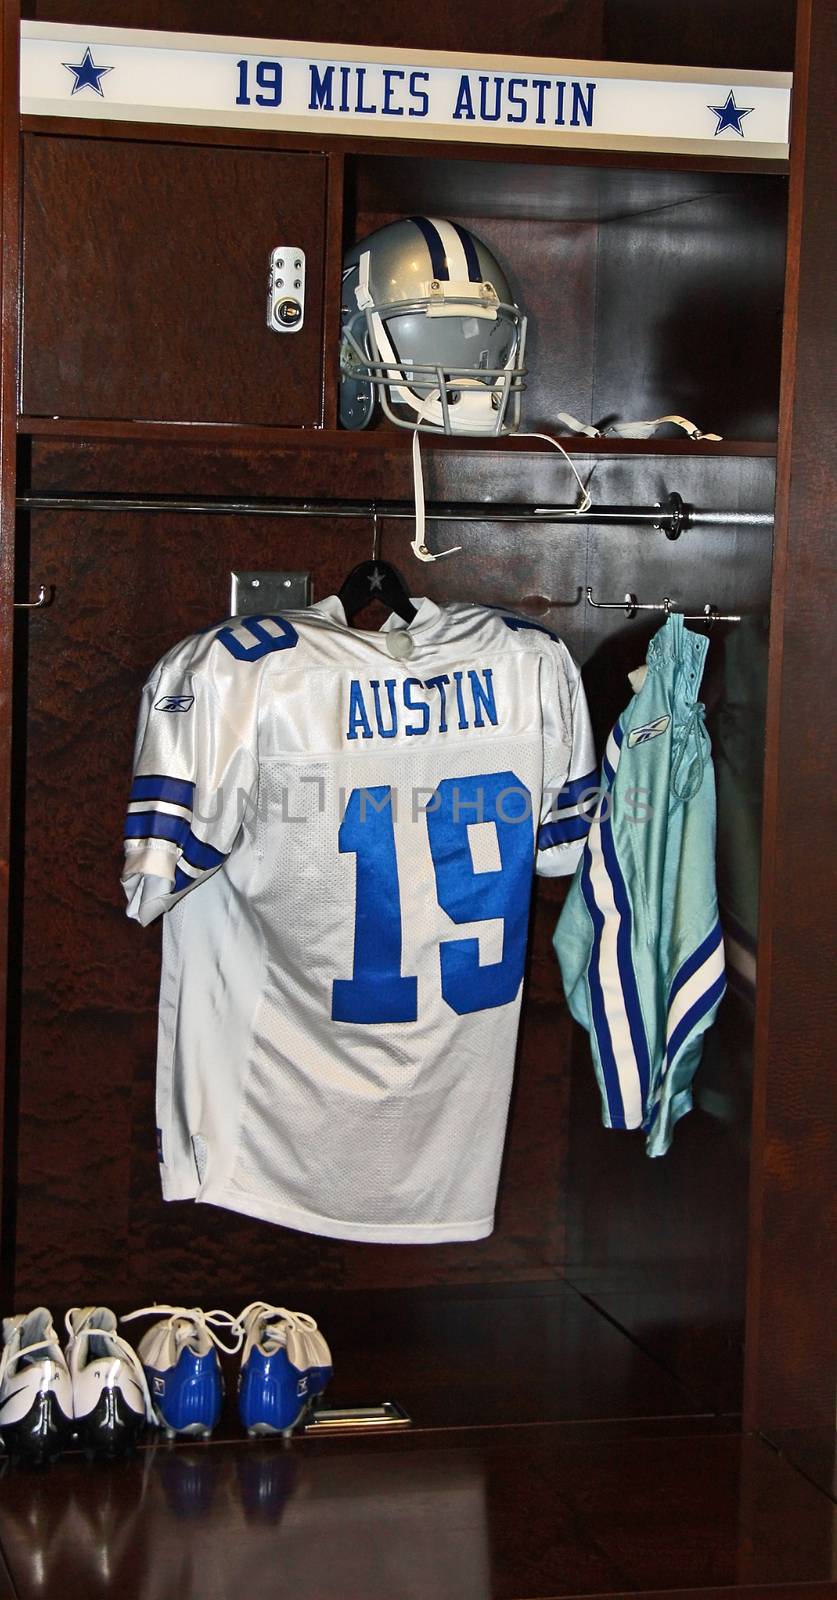 ARLINGTON - JUNE 16: Miles Austin's locker in the Dallas Cowboys locker room in Cowboys Stadium  Arlington, Texas. Taken June 16, 2010 in Arlington, TX.